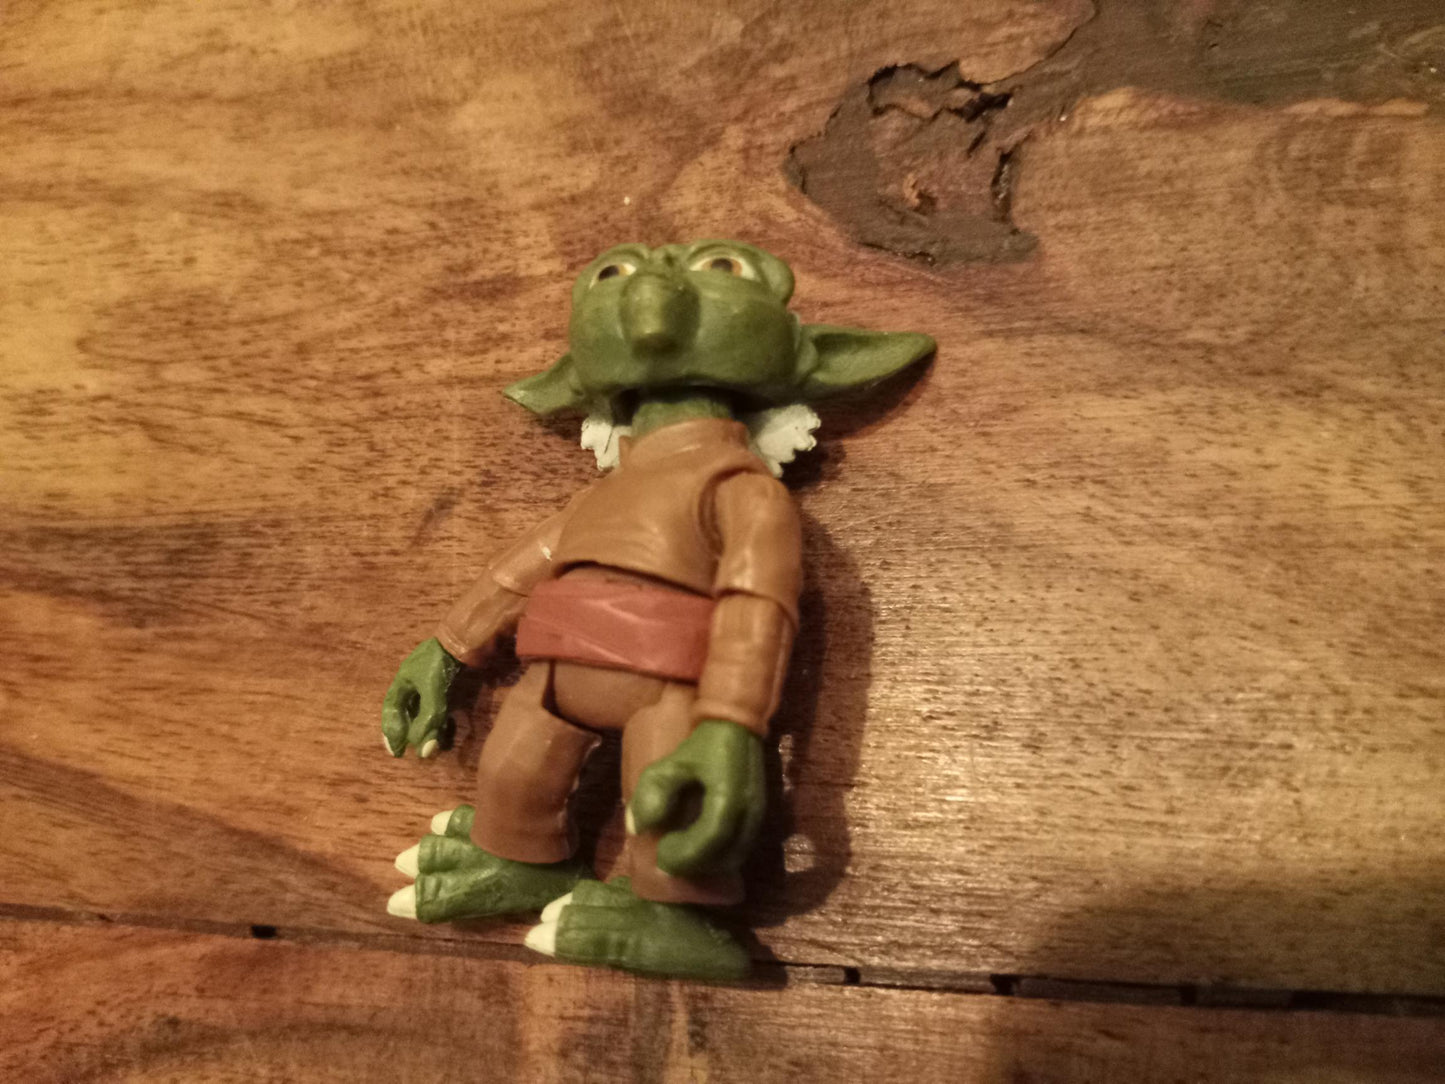 Star Wars Yoda Action Figure 2.5" Hasbro 2009